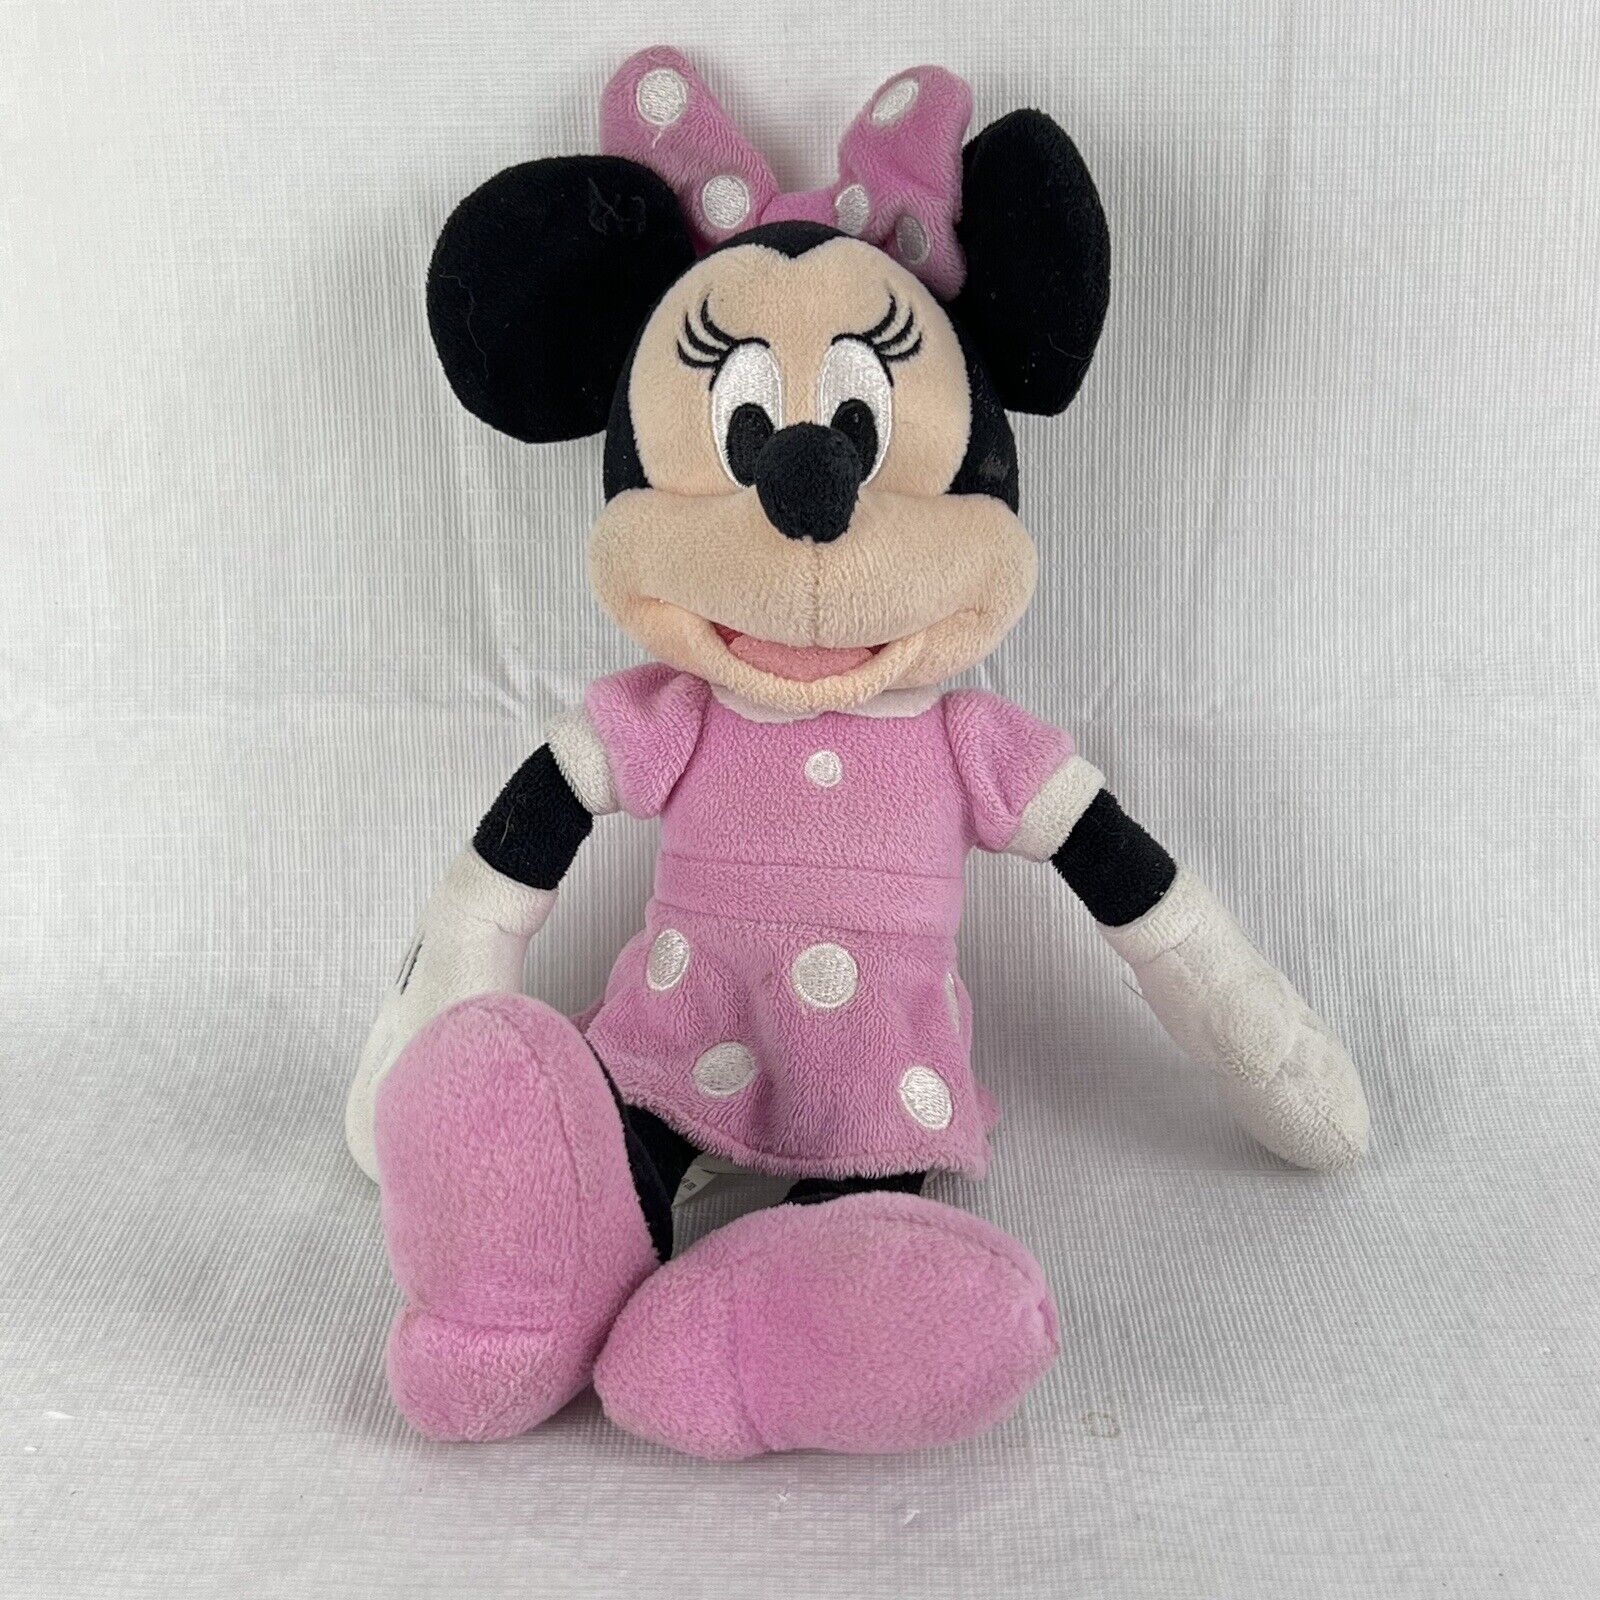 Mini Mouse 9” Disney Pink Polka Dot Dress Just Play Kids Plush